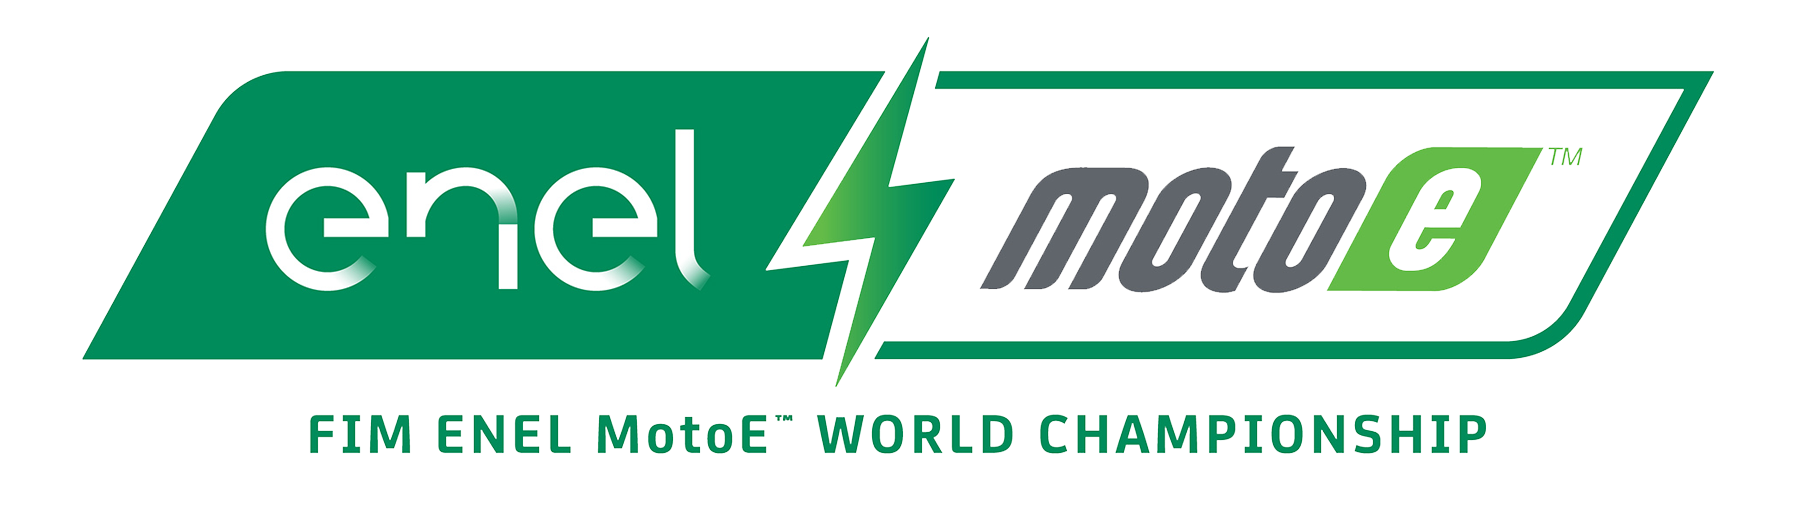 FIM Enel MotoE™ World Championship